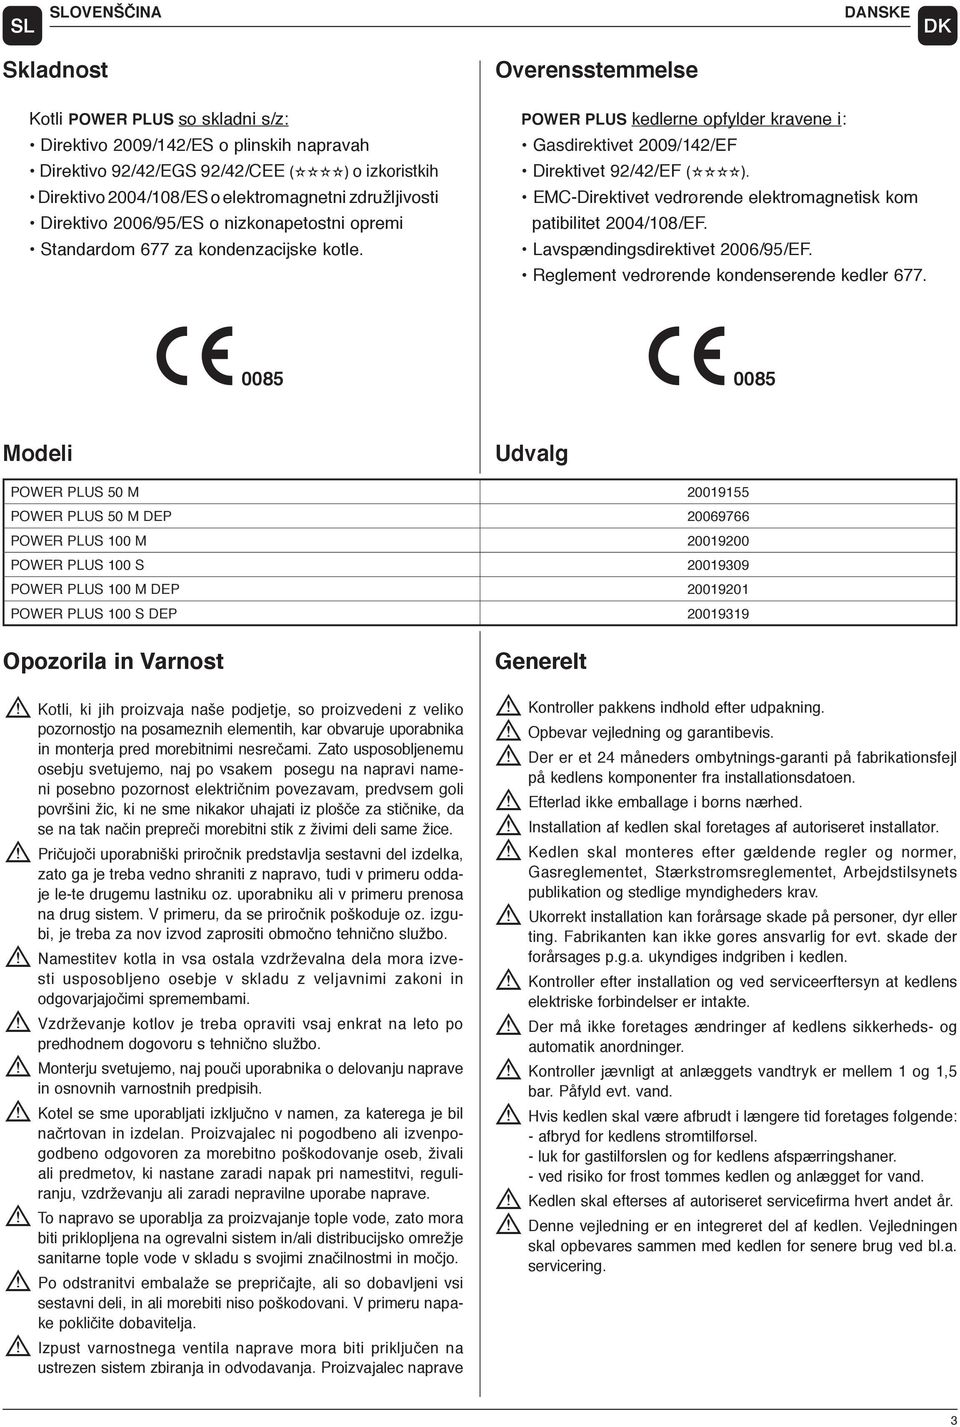 EMC-Direktivet vedrørende elektroagnetisk ko patibilitet 2004/08/EF. Lavspændingsdirektivet 2006/95/EF. Regleent vedrørende kondenserende kedler 677.